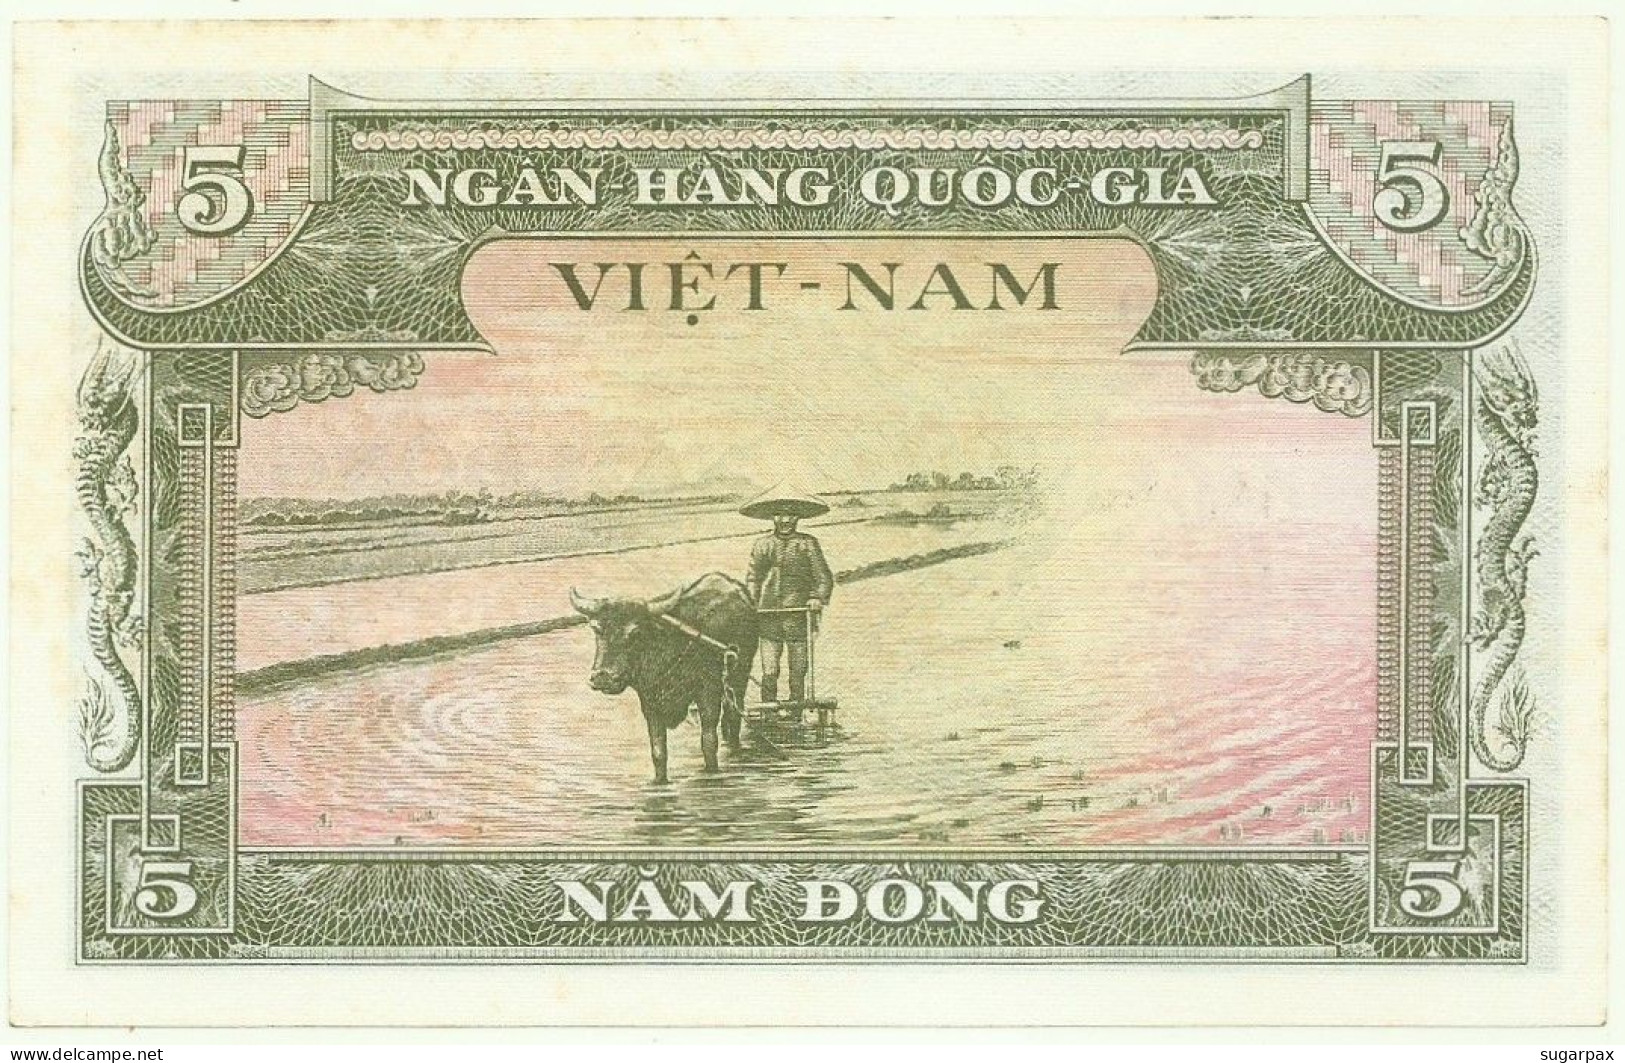 SOUTH VIET NAM - 5 DONG - ND ( 1955 ) - P 2 - AUnc. - SÉRIE O 2 - Bird - VIETNAM - Vietnam